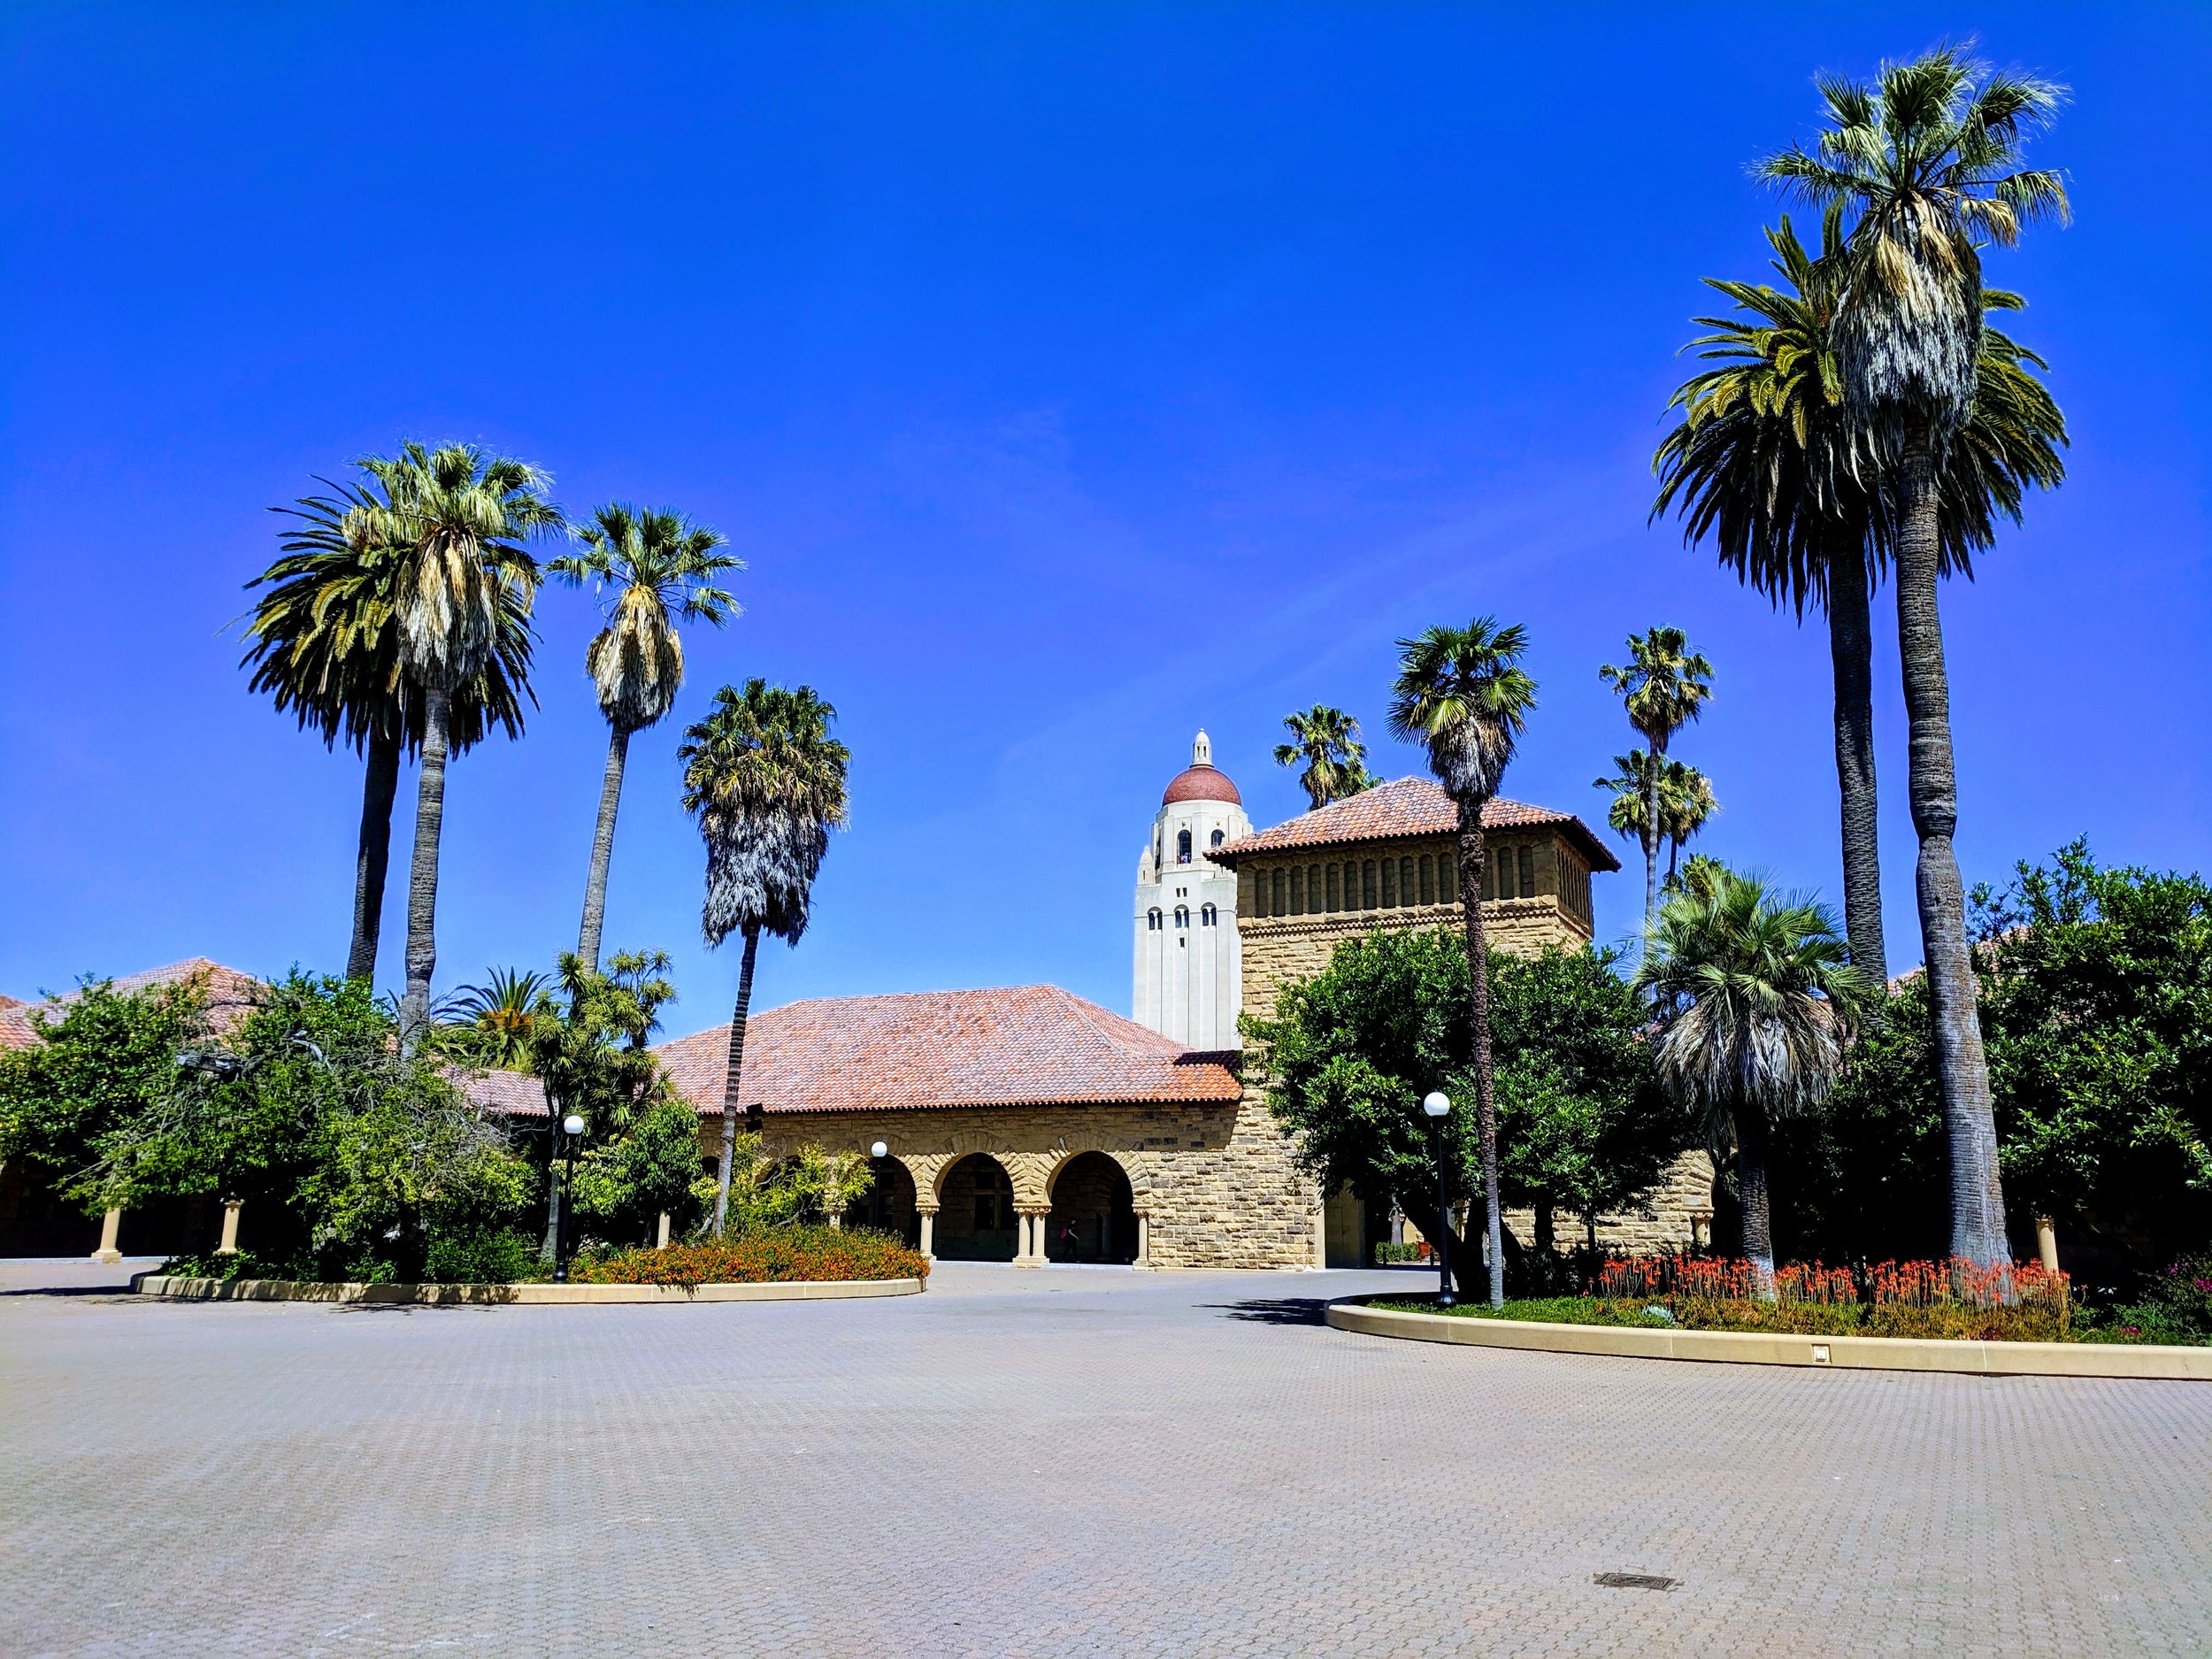  Main Quad at Stanford University 